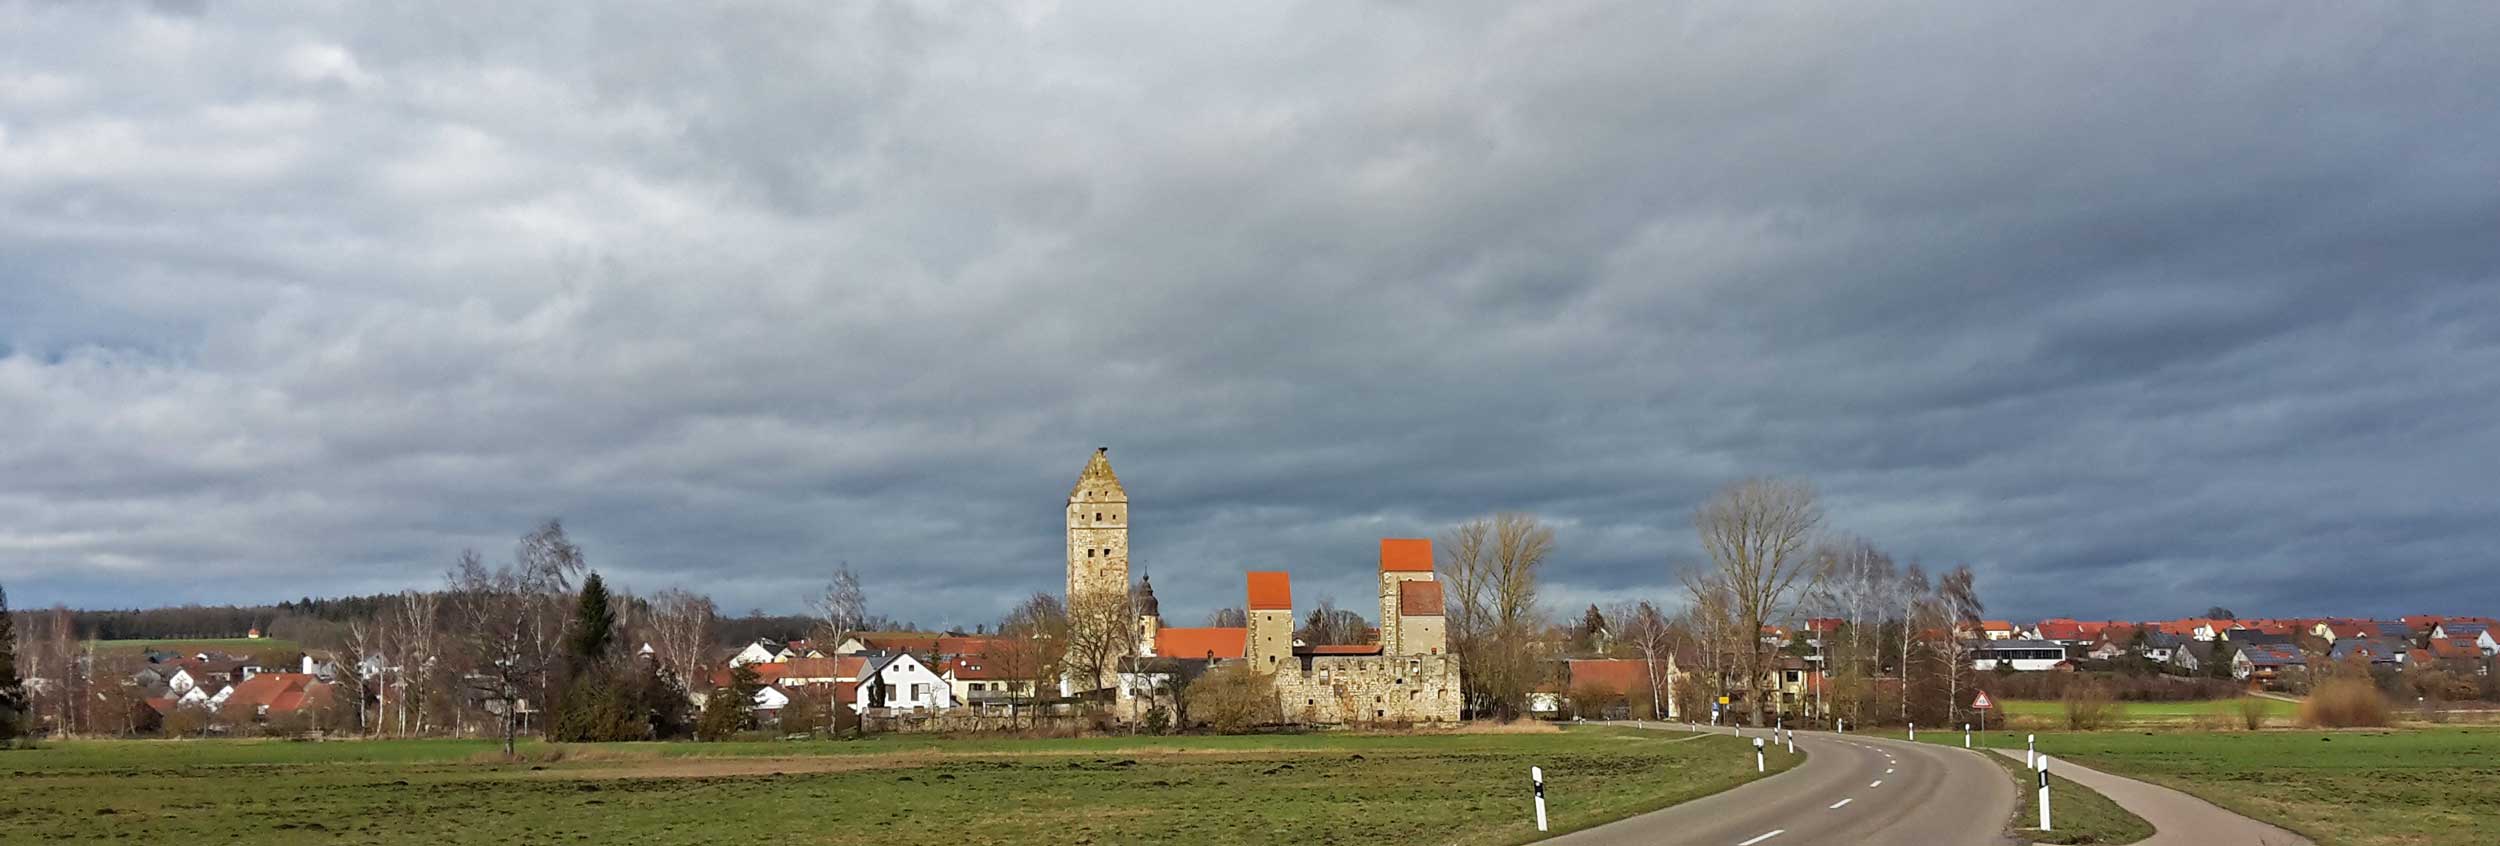 Burg Nassenfels